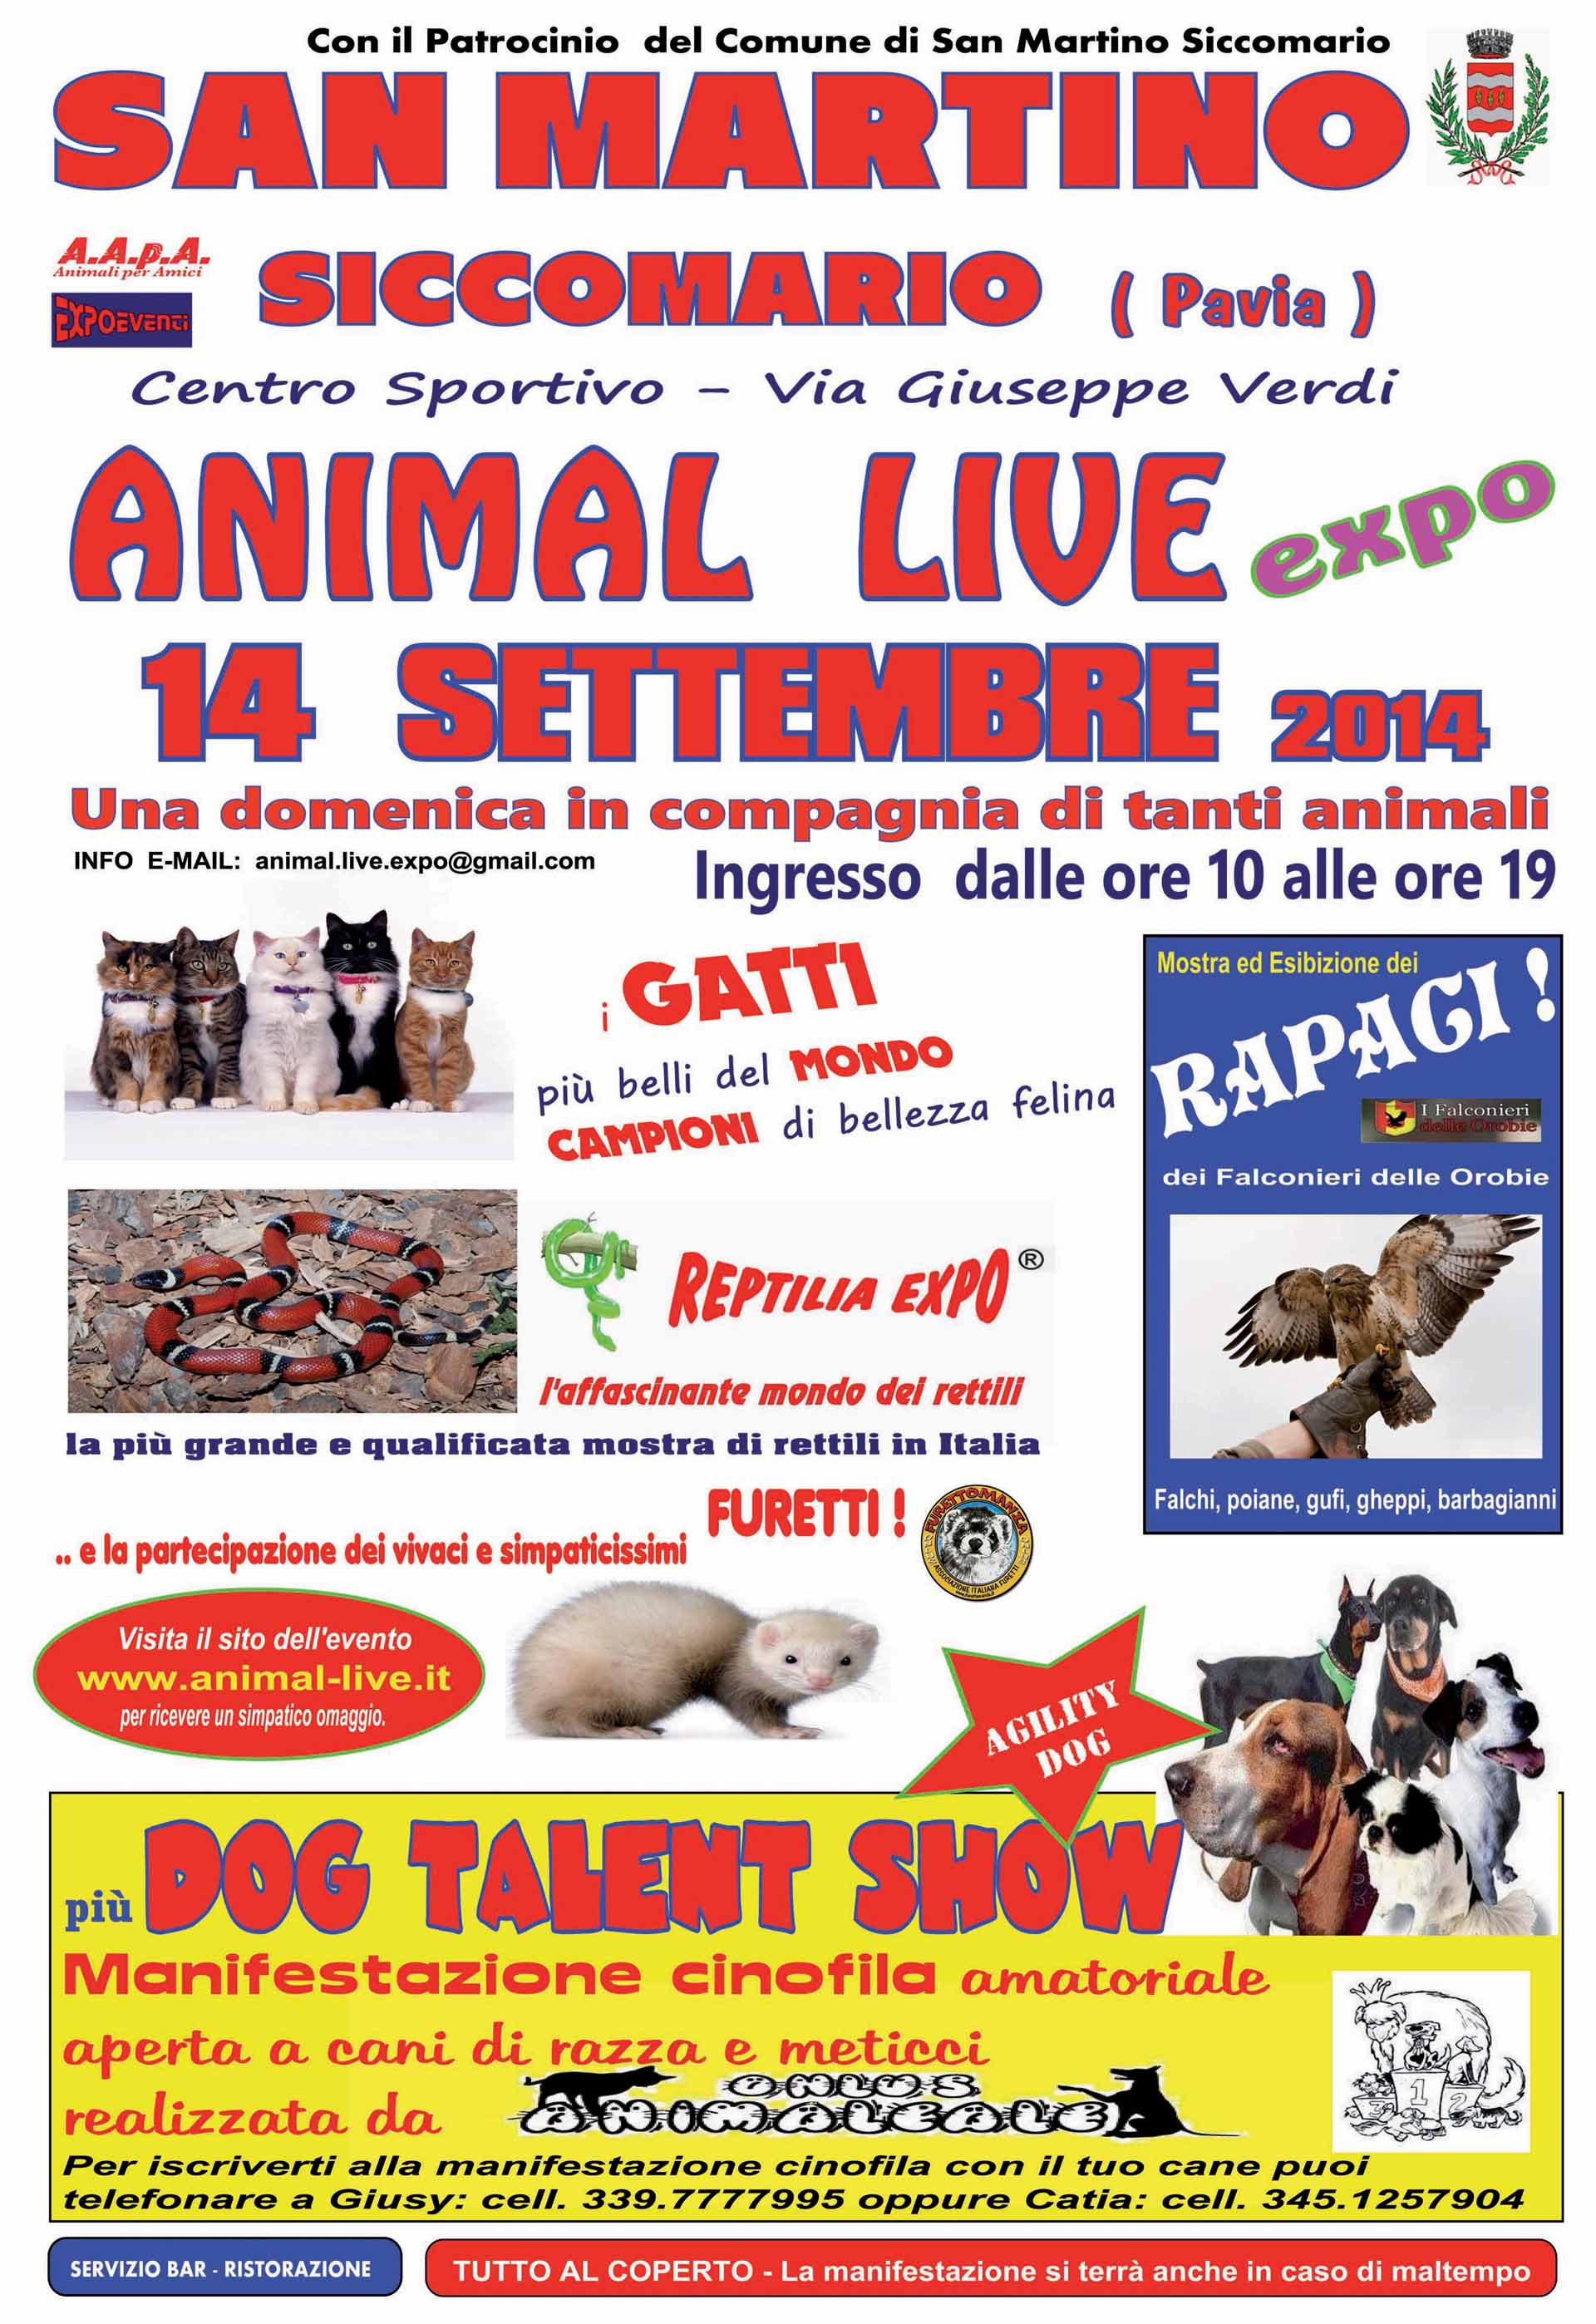 Animal Live Expo San Martino 14 settembre 2014